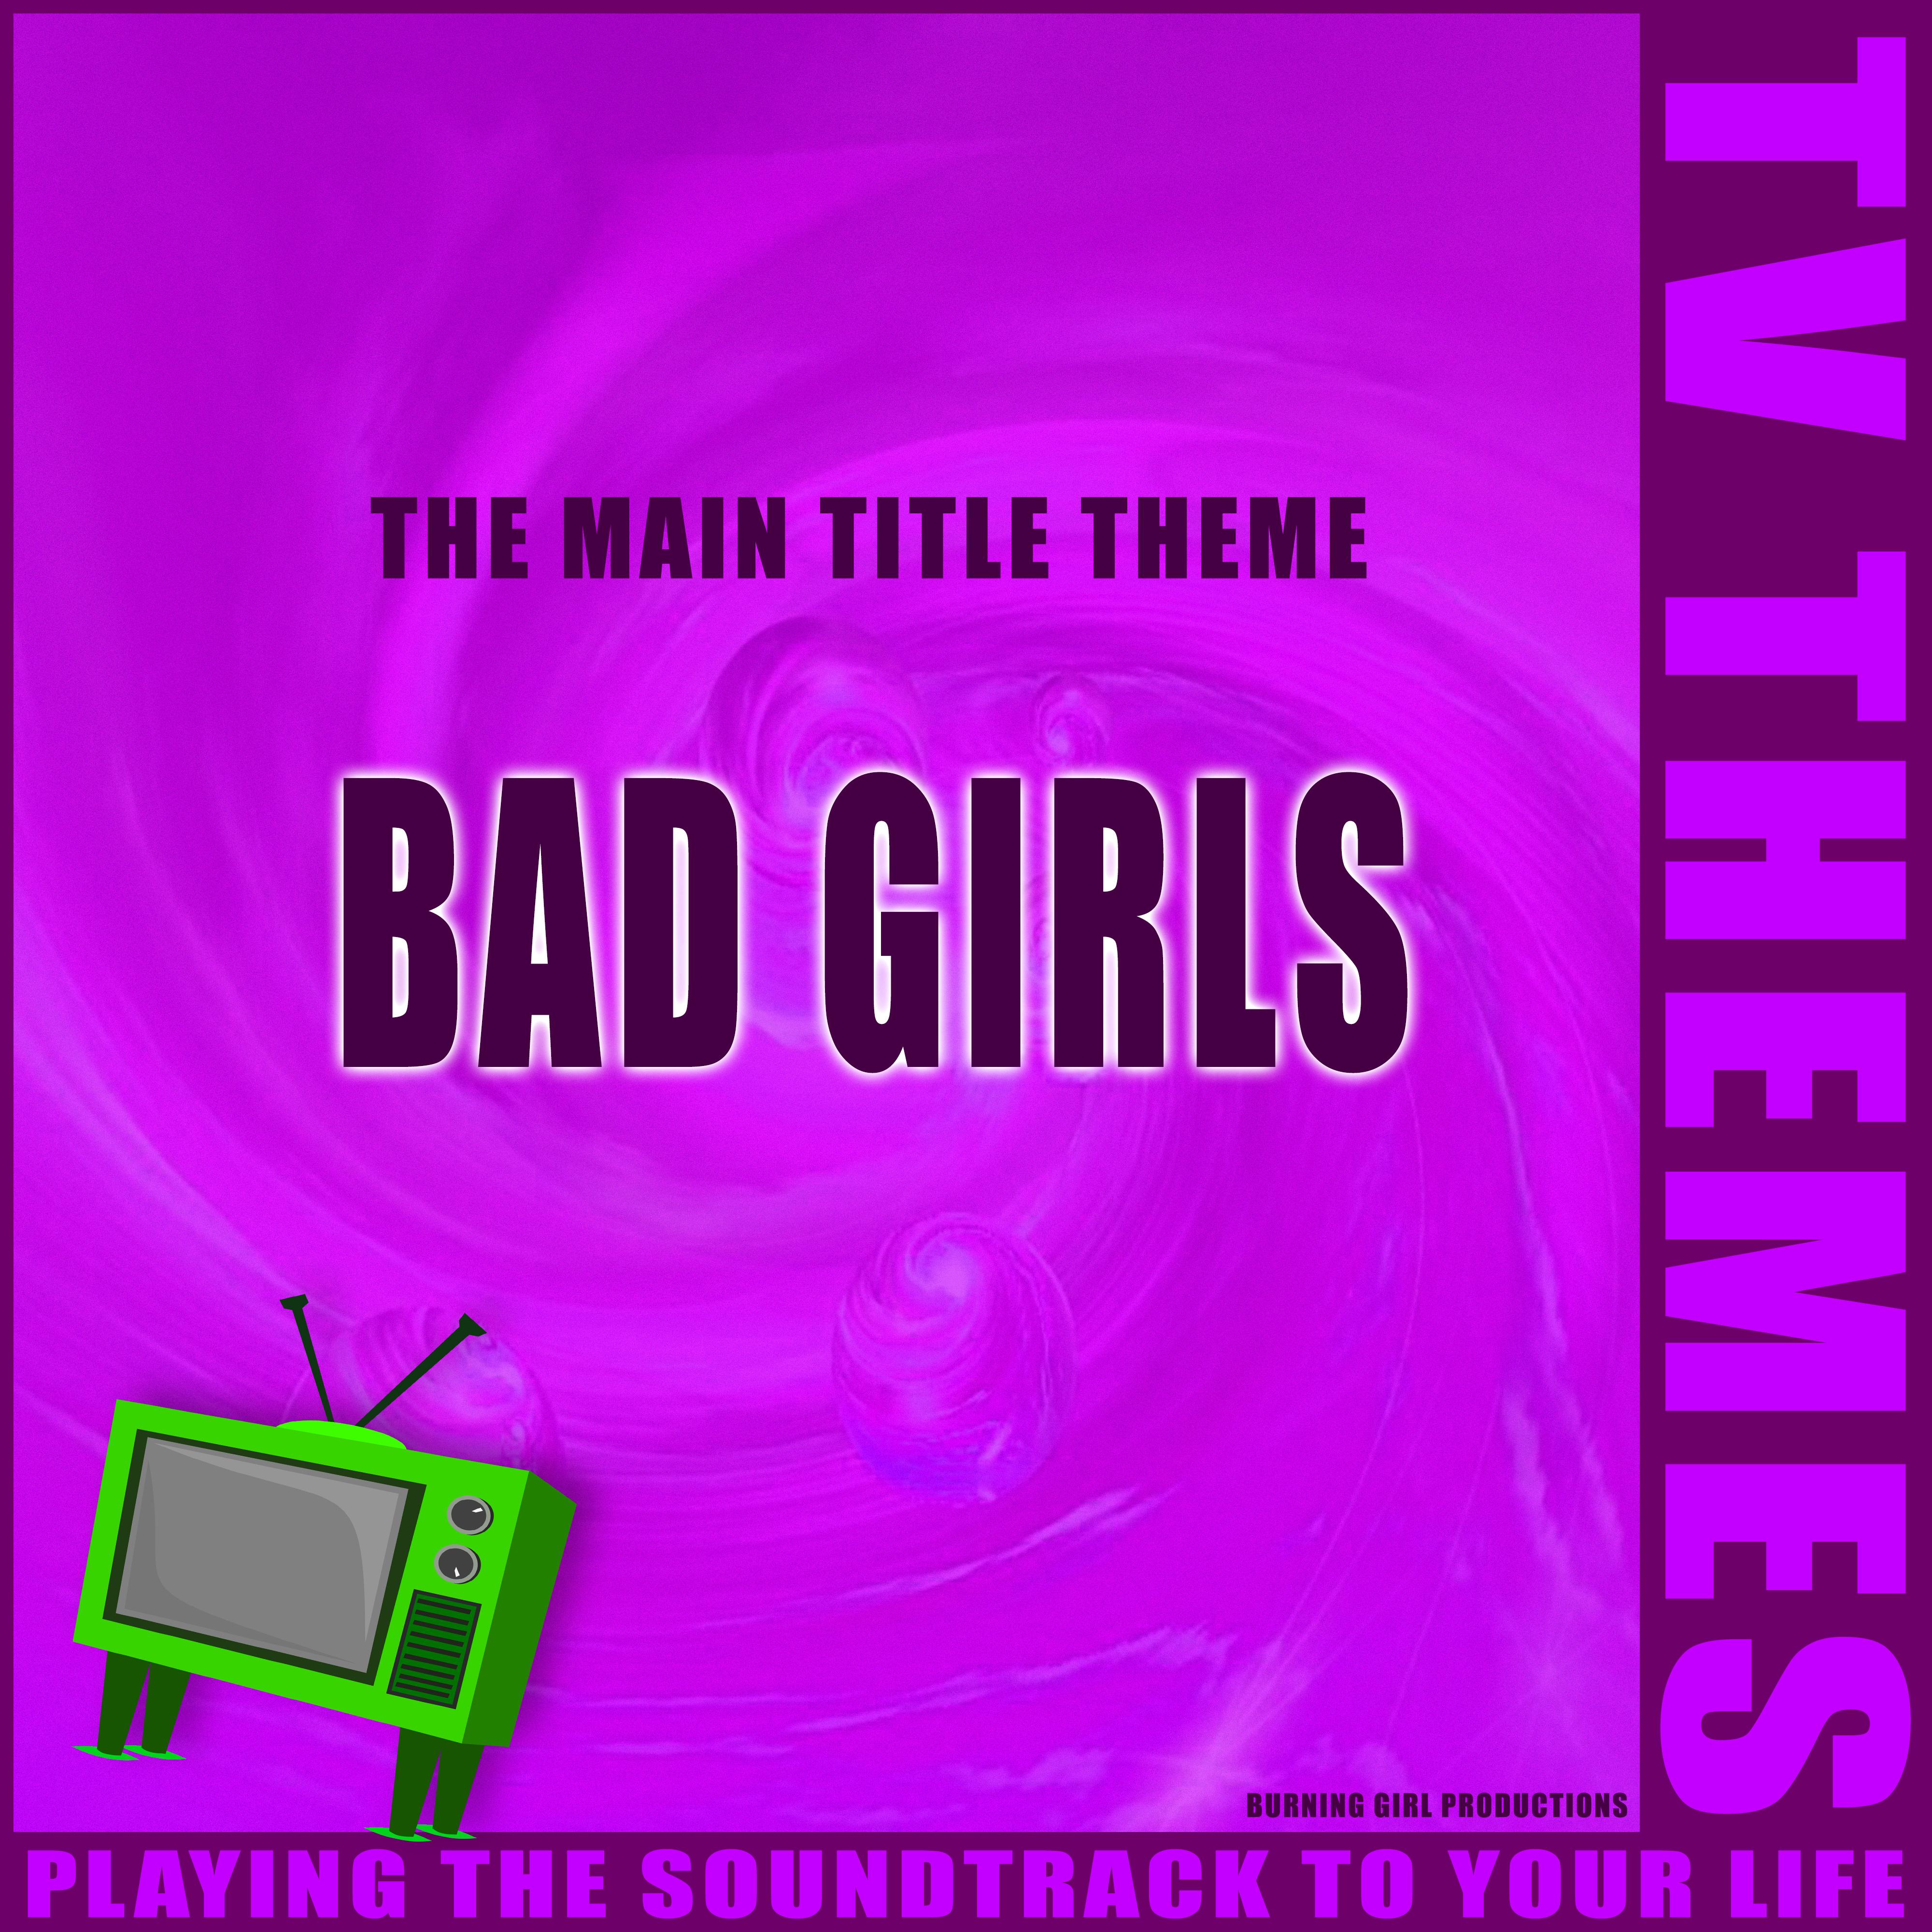 The Main Title Theme - Bad Girls